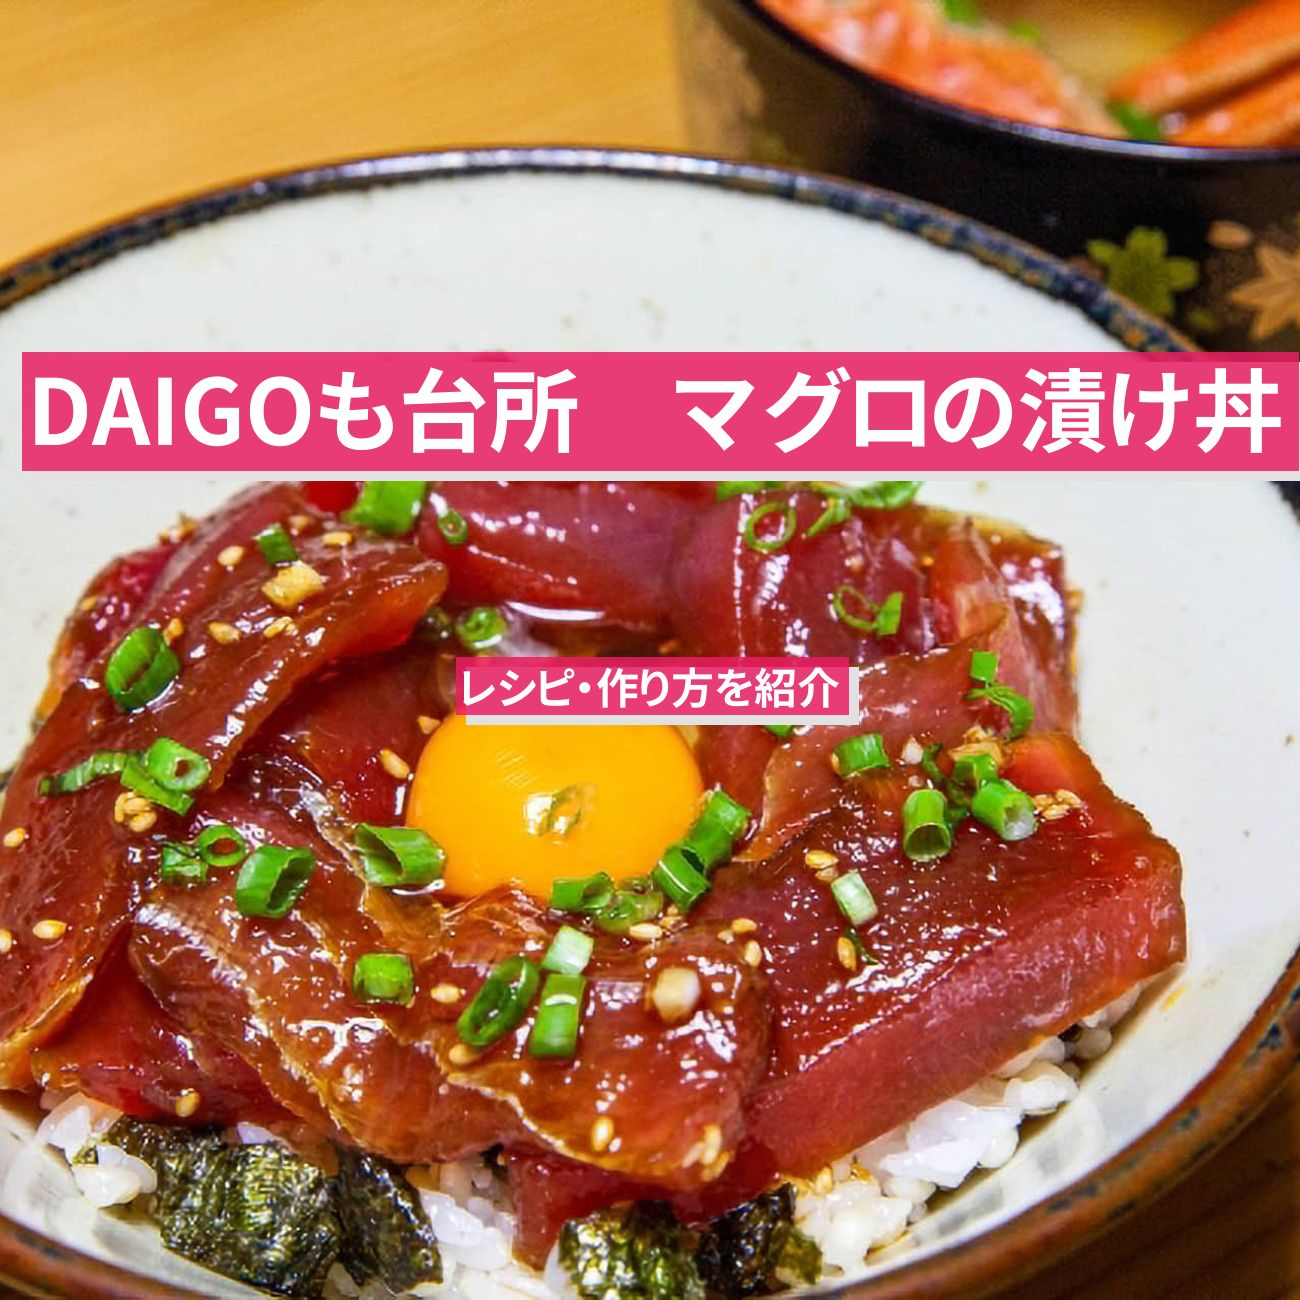 【DAIGOも台所】『マグロの漬け丼』のレシピ・作り方を紹介〔ダイゴも台所〕